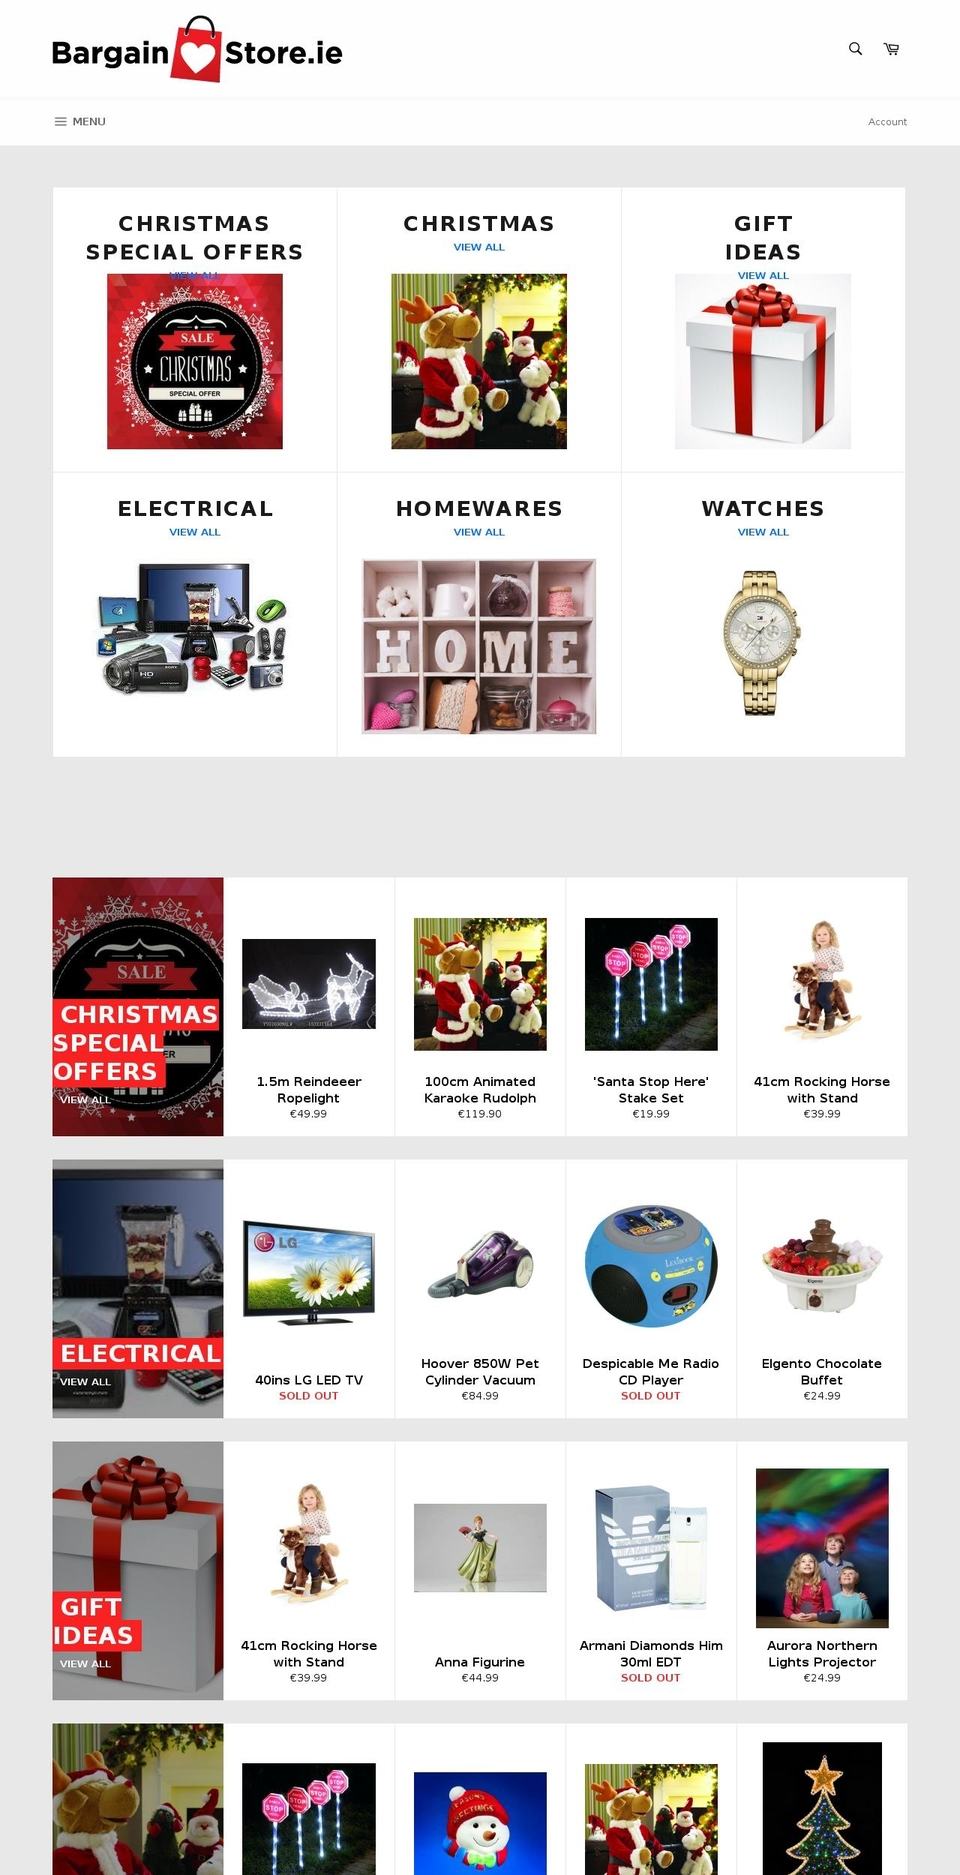 bargainstore.ie shopify website screenshot